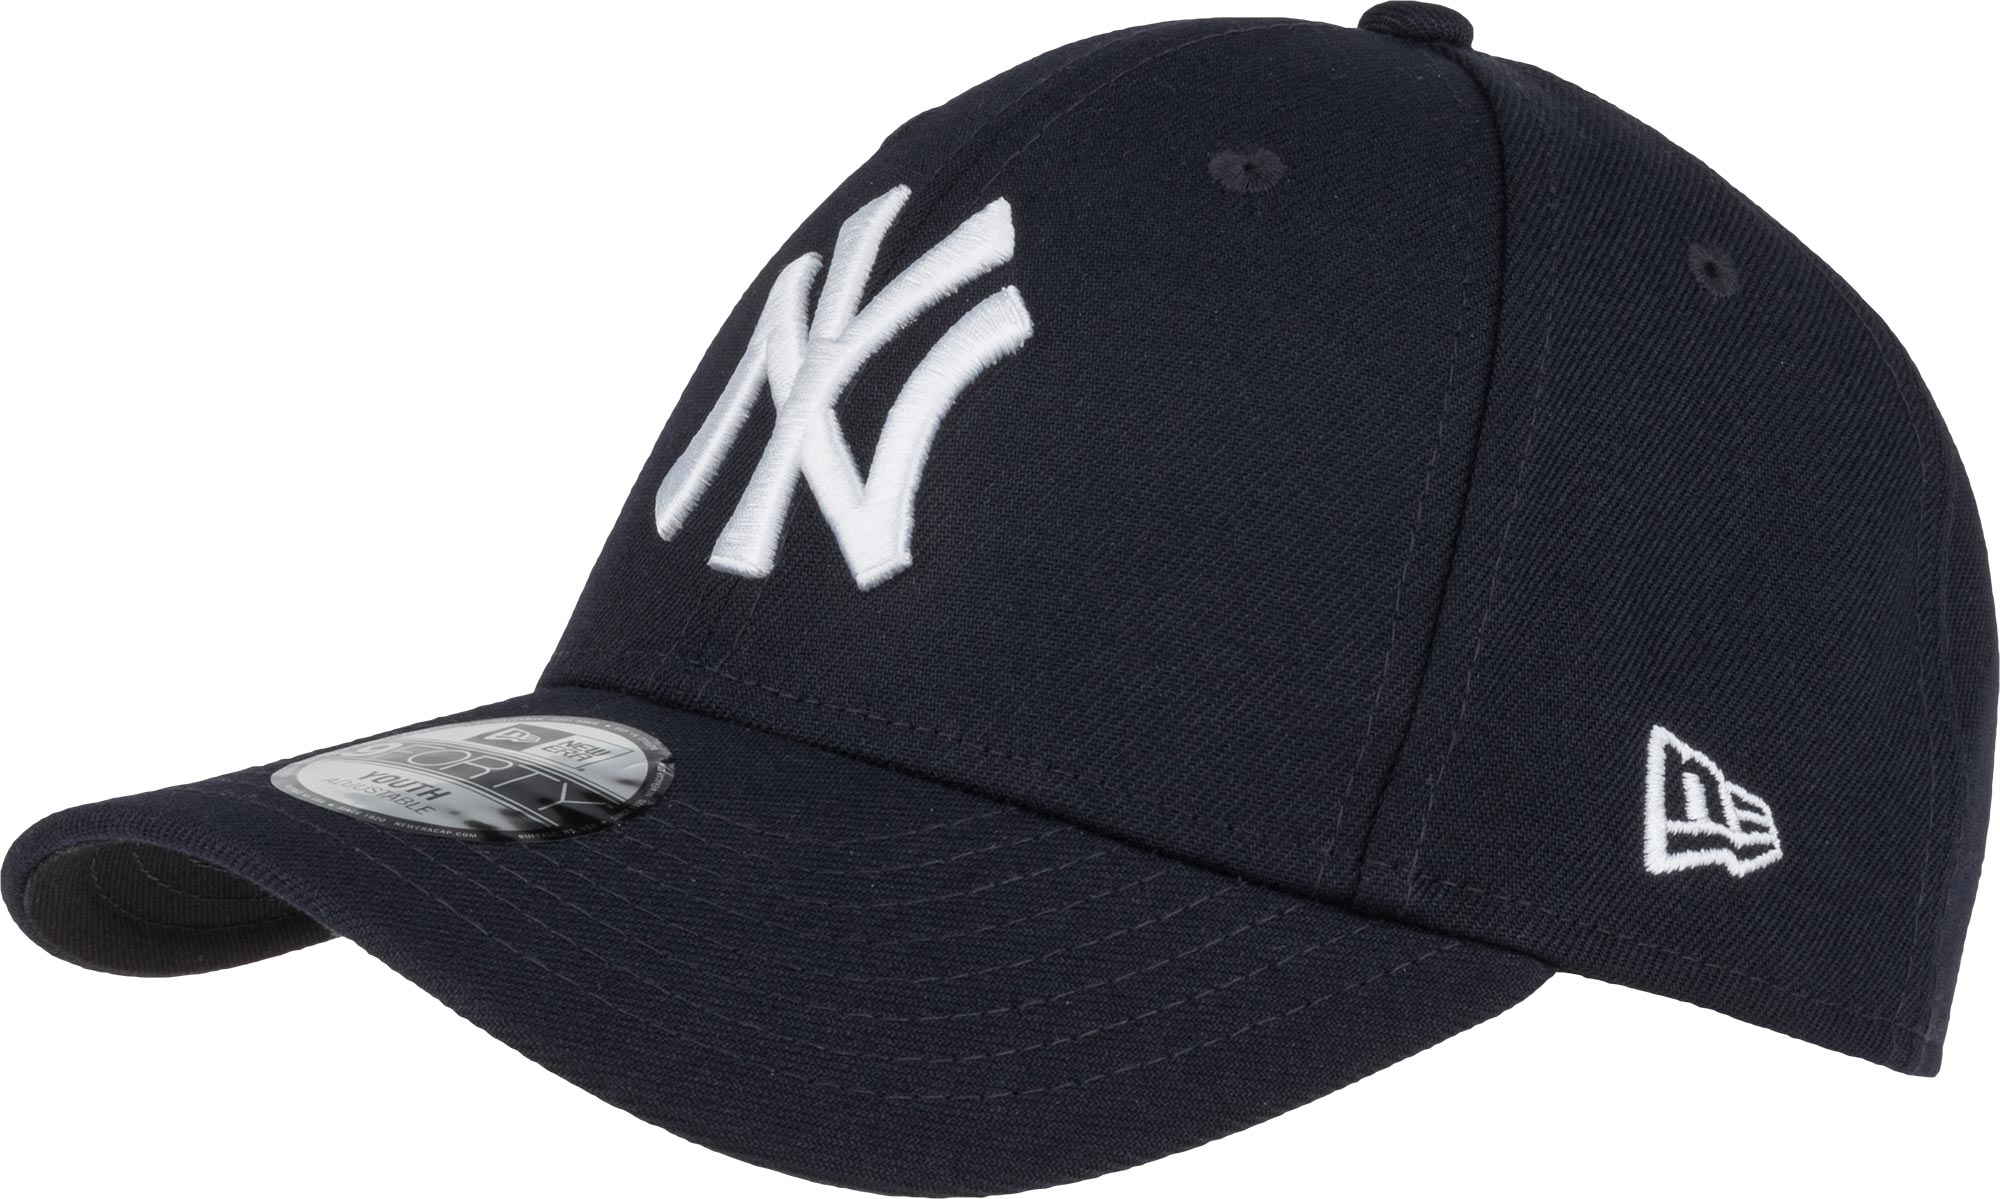 Kids’ baseball cap